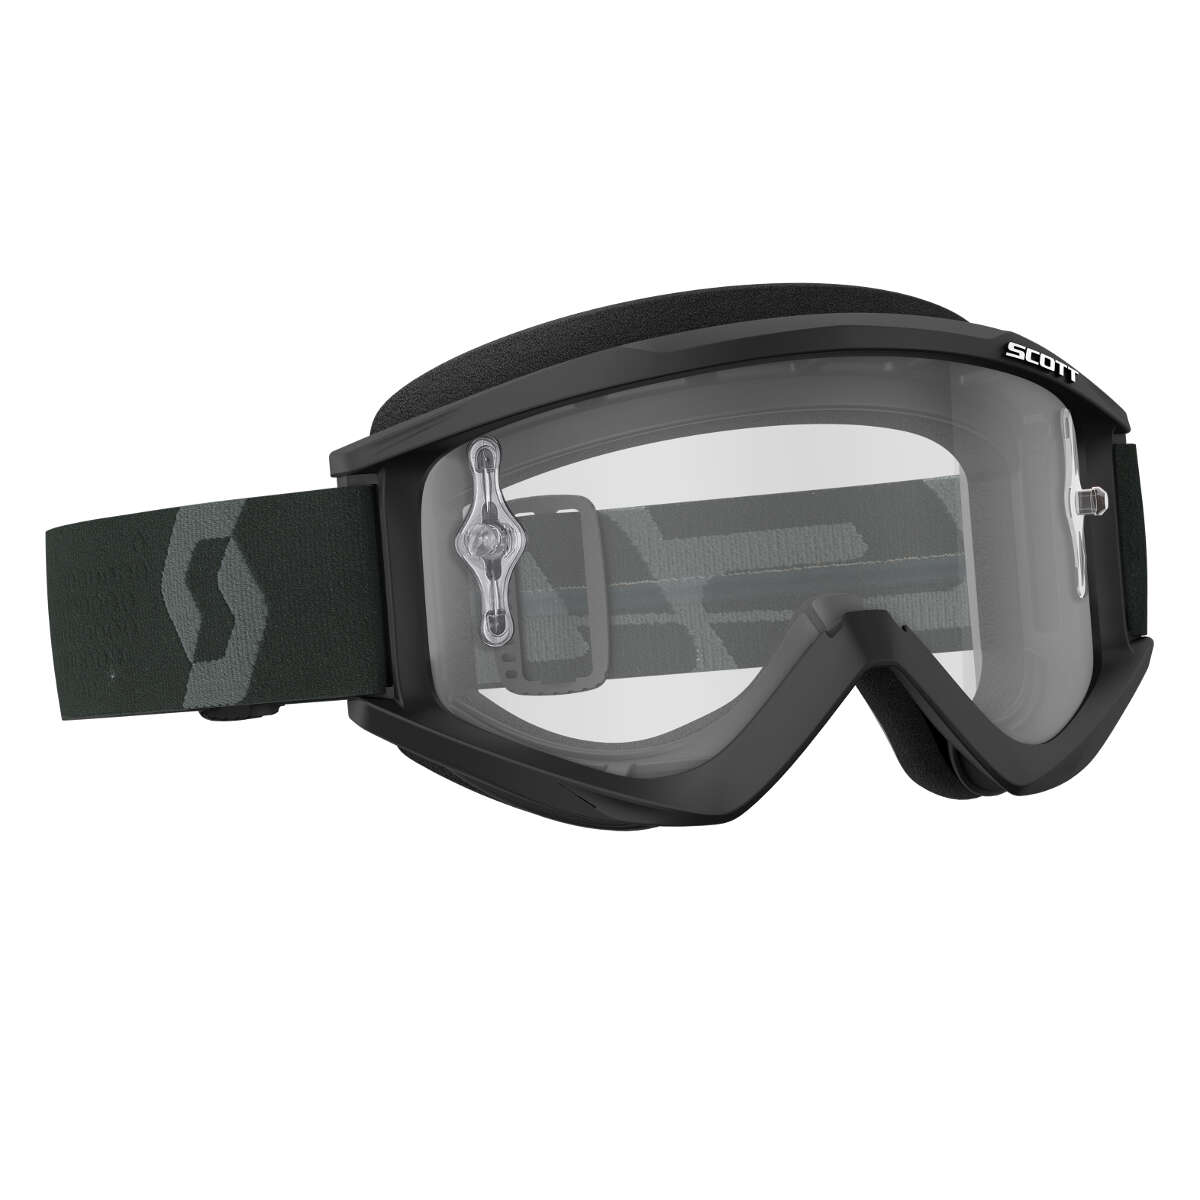 Scott Recoil Xi Goggle Recoil Xi Black/White - Clear Works Anti-Fog